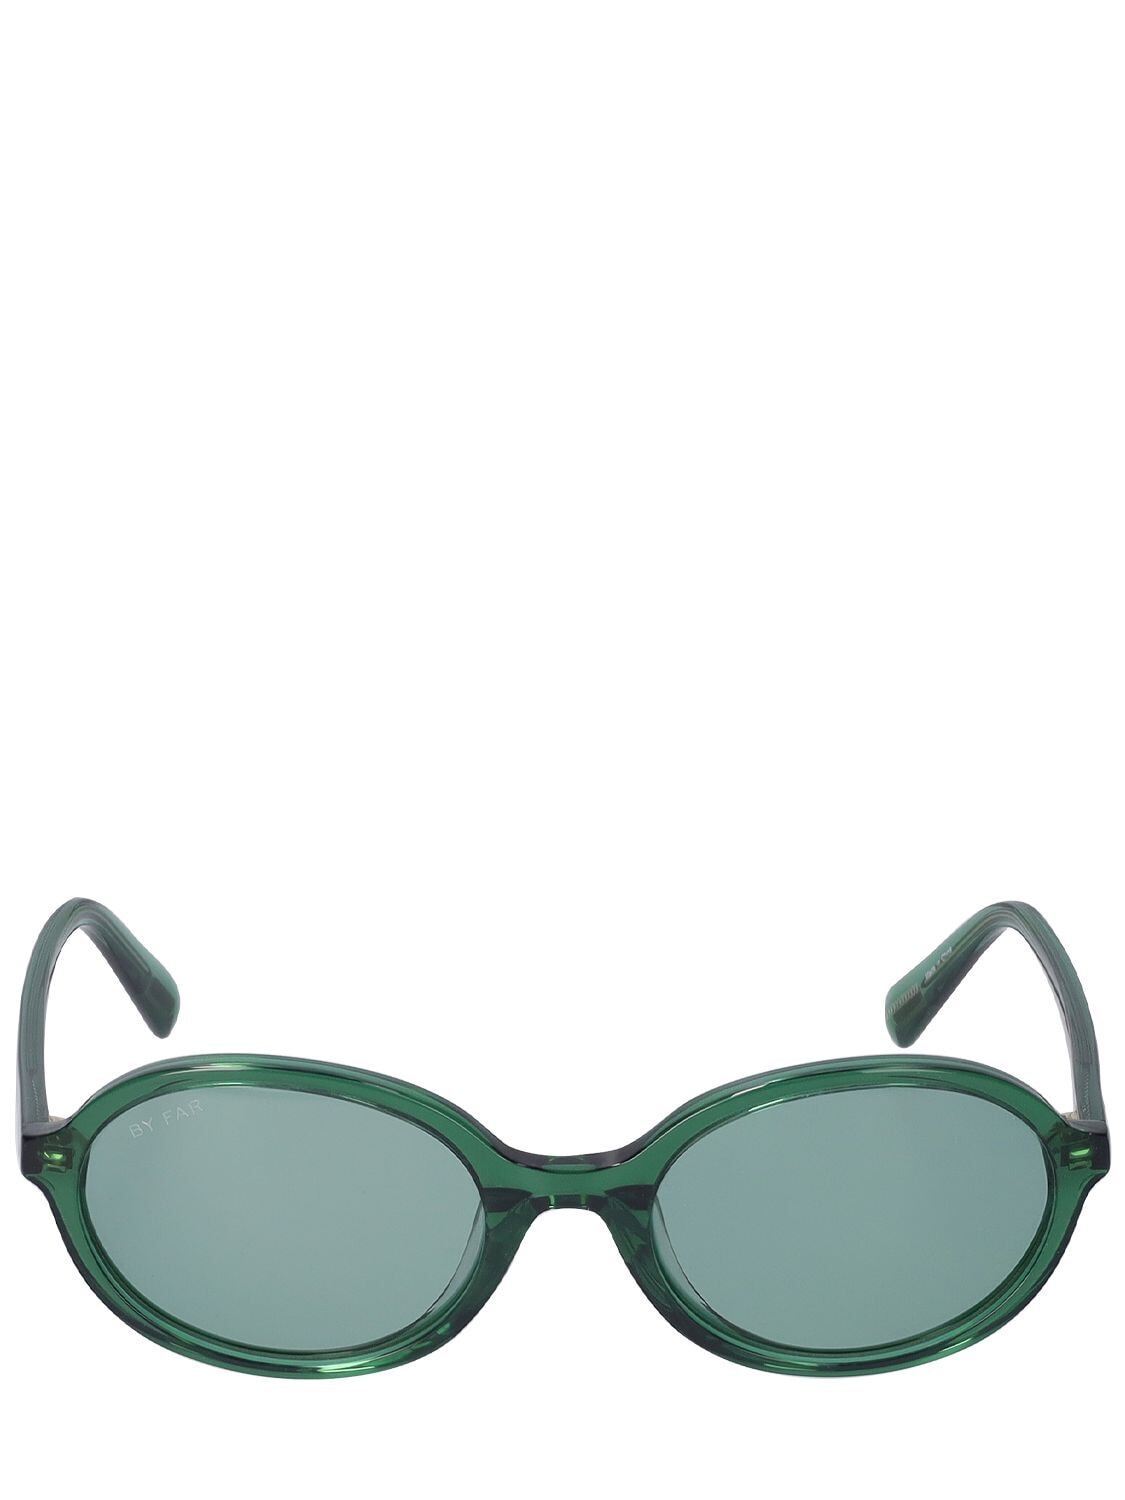 BY FAR Velvet Round Acetate Sunglasses in emerald